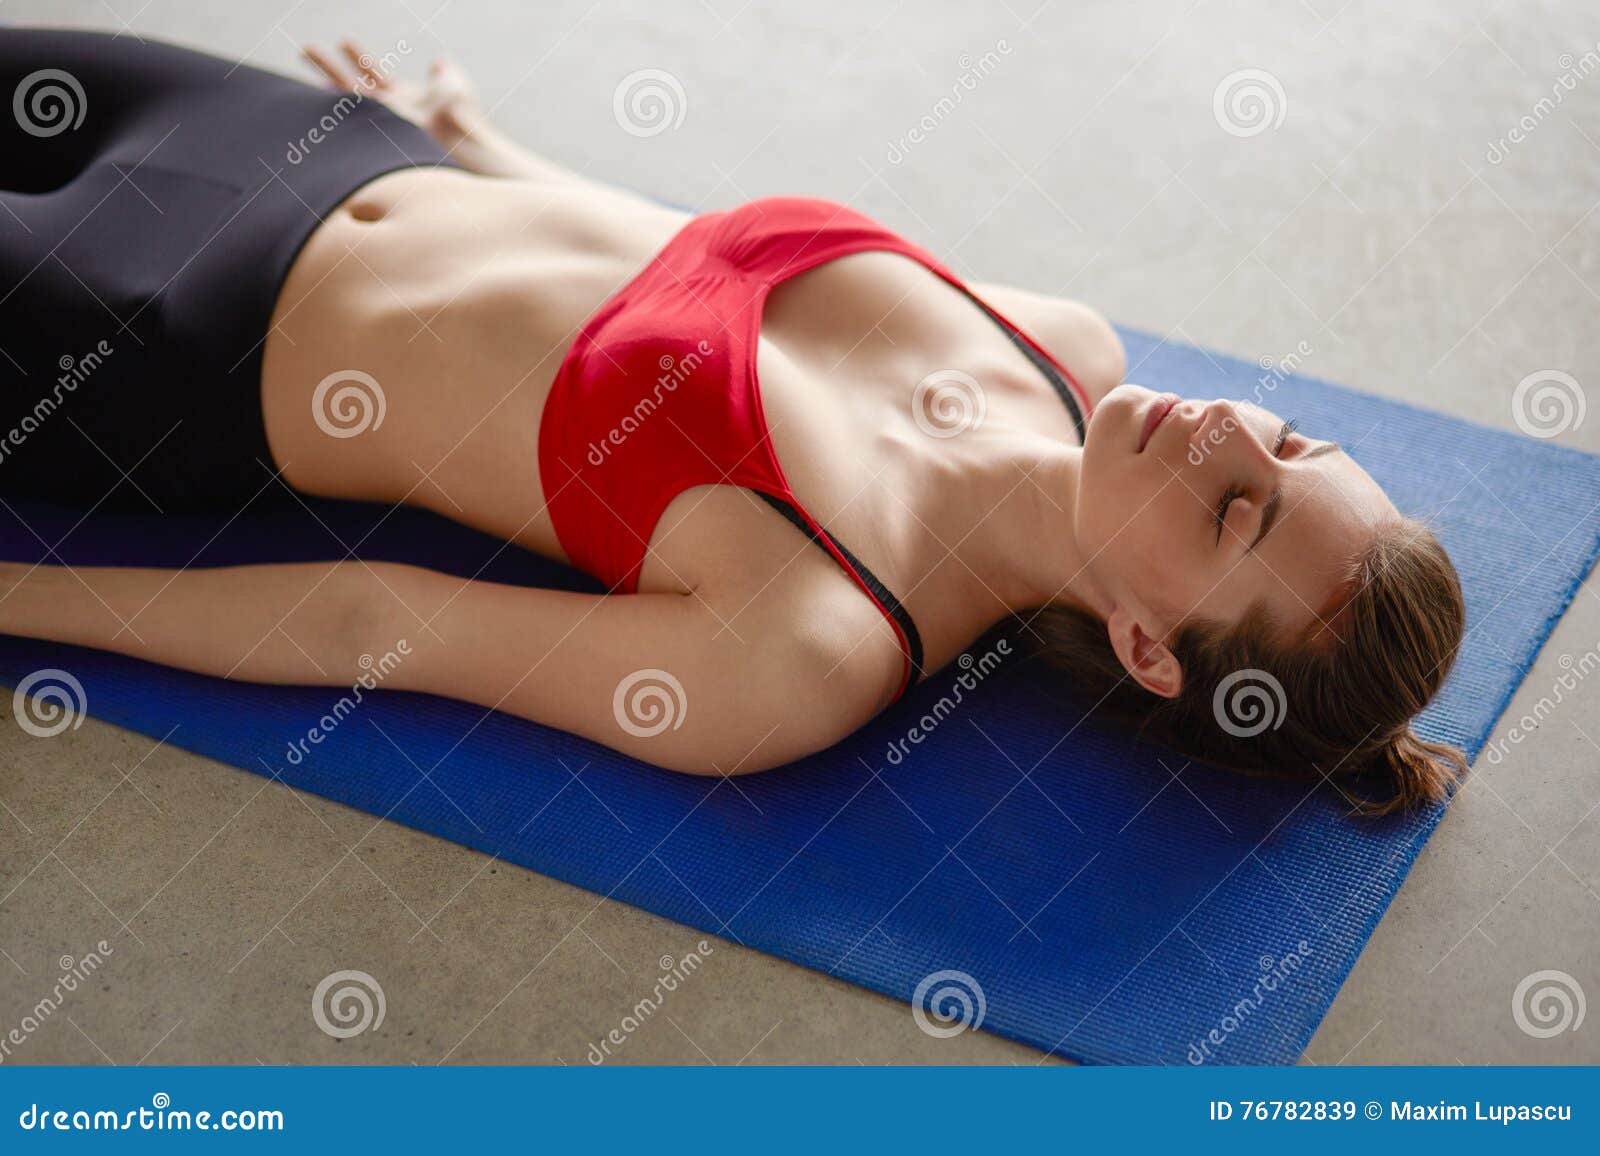 Лежа на животе подборка. Лежа на животе. Девушка лежит на спине. Живот лежа на спине. Девушка лежит на коврике для йоги.